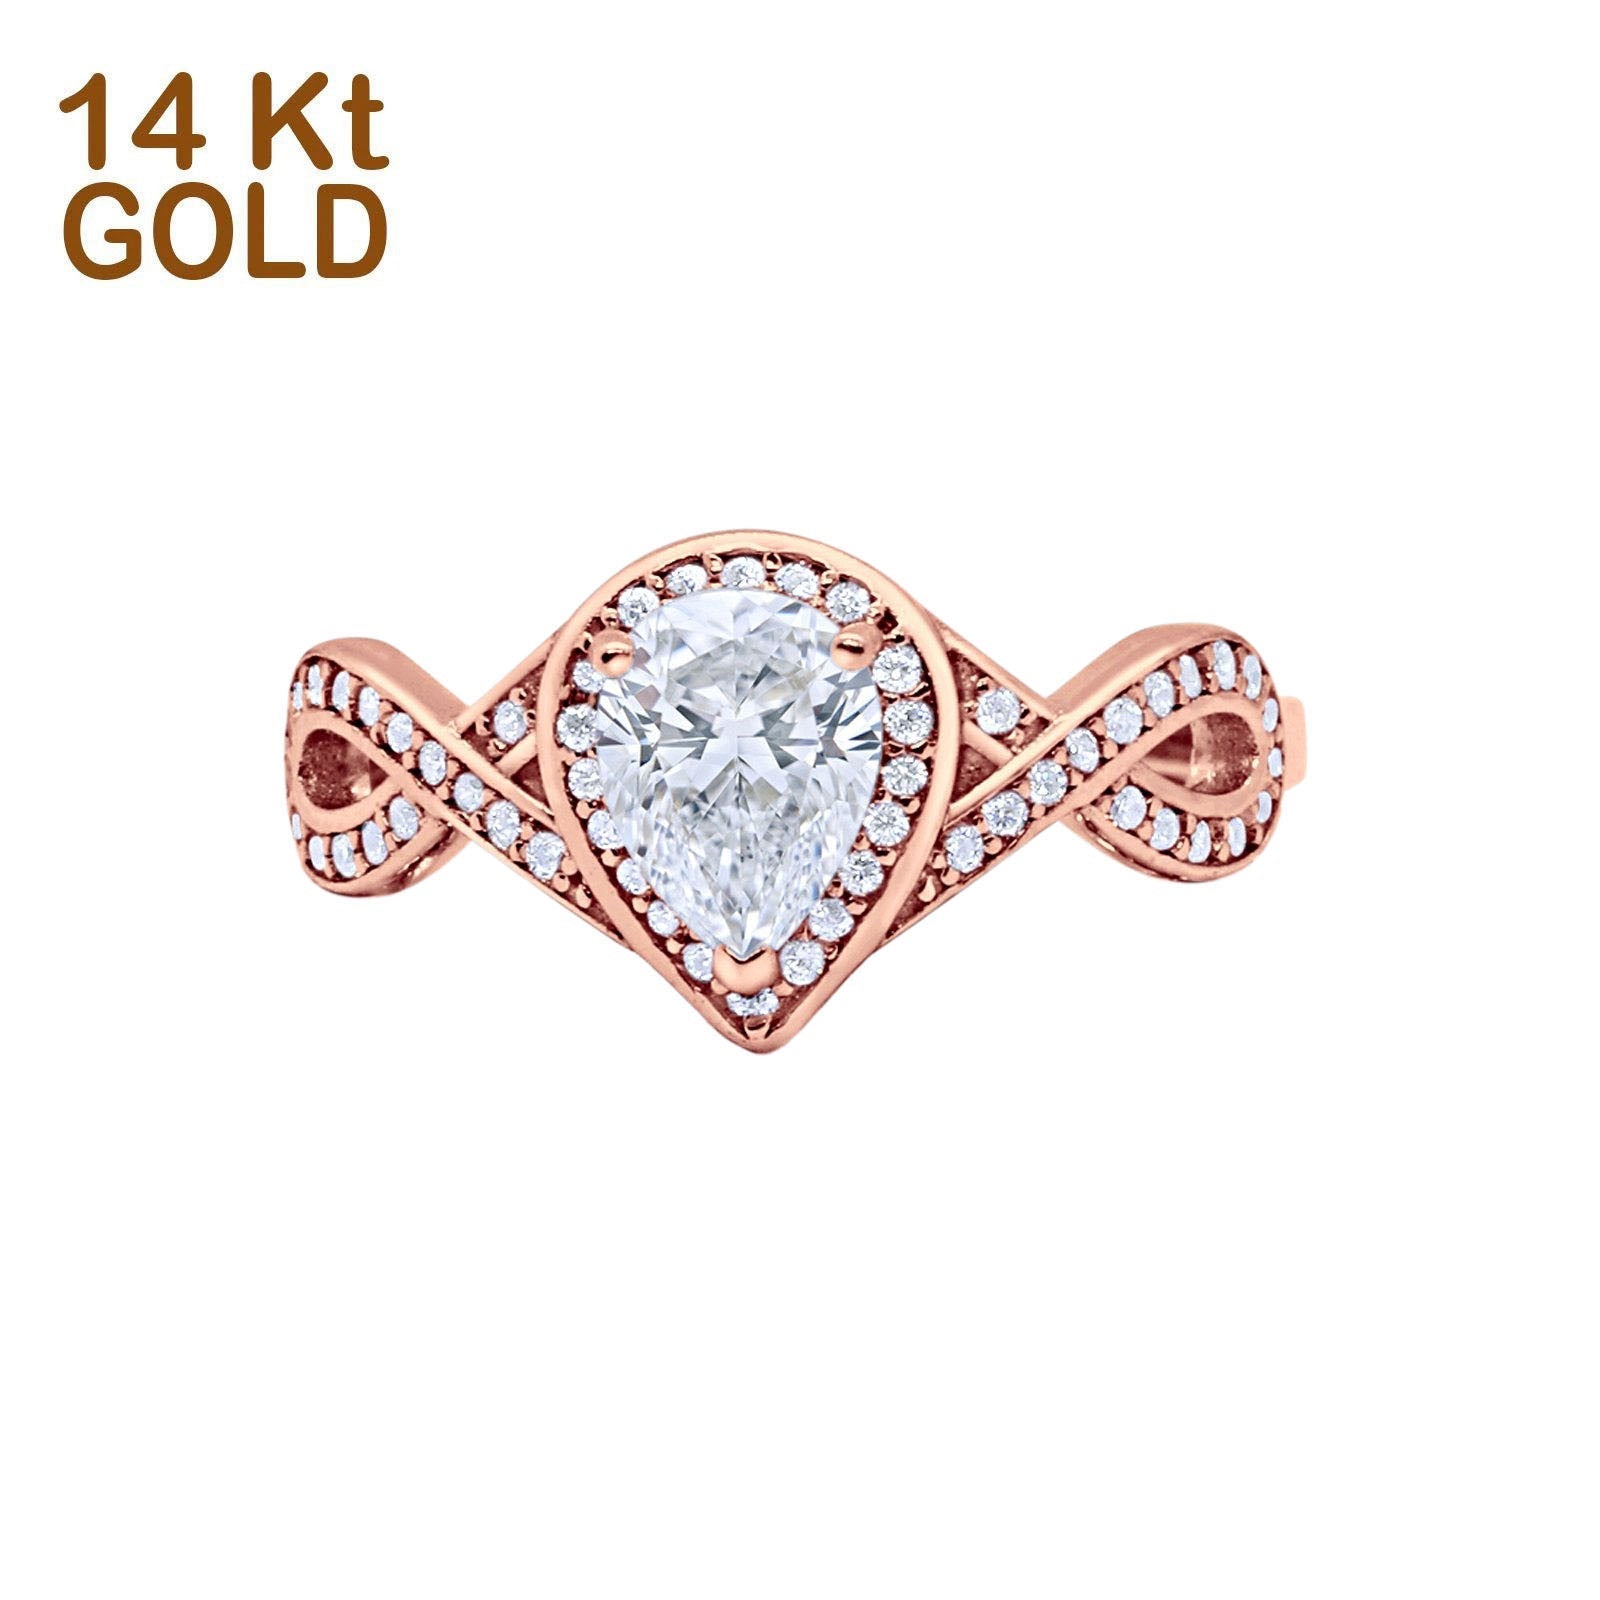 14K Gold Teardrop Pear Shape Art Deco Wedding Ring Simulated Cubic Zirconia